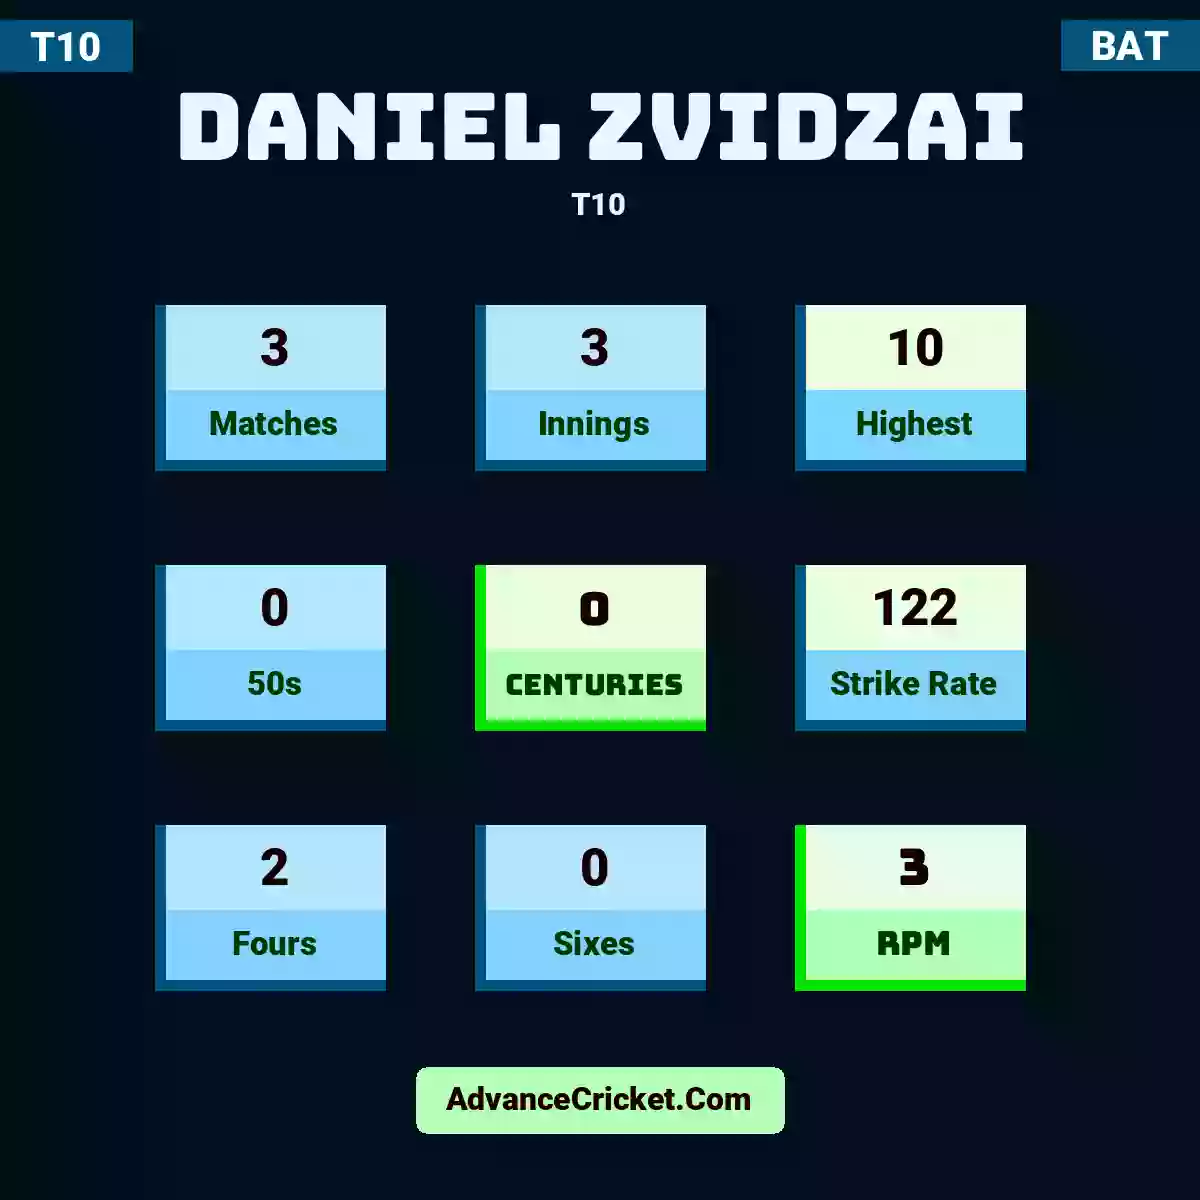 Daniel Zvidzai T10 , Daniel Zvidzai played 3 matches, scored 10 runs as highest, 0 half-centuries, and 0 centuries, with a strike rate of 122. D.Zvidzai hit 2 fours and 0 sixes, with an RPM of 3.